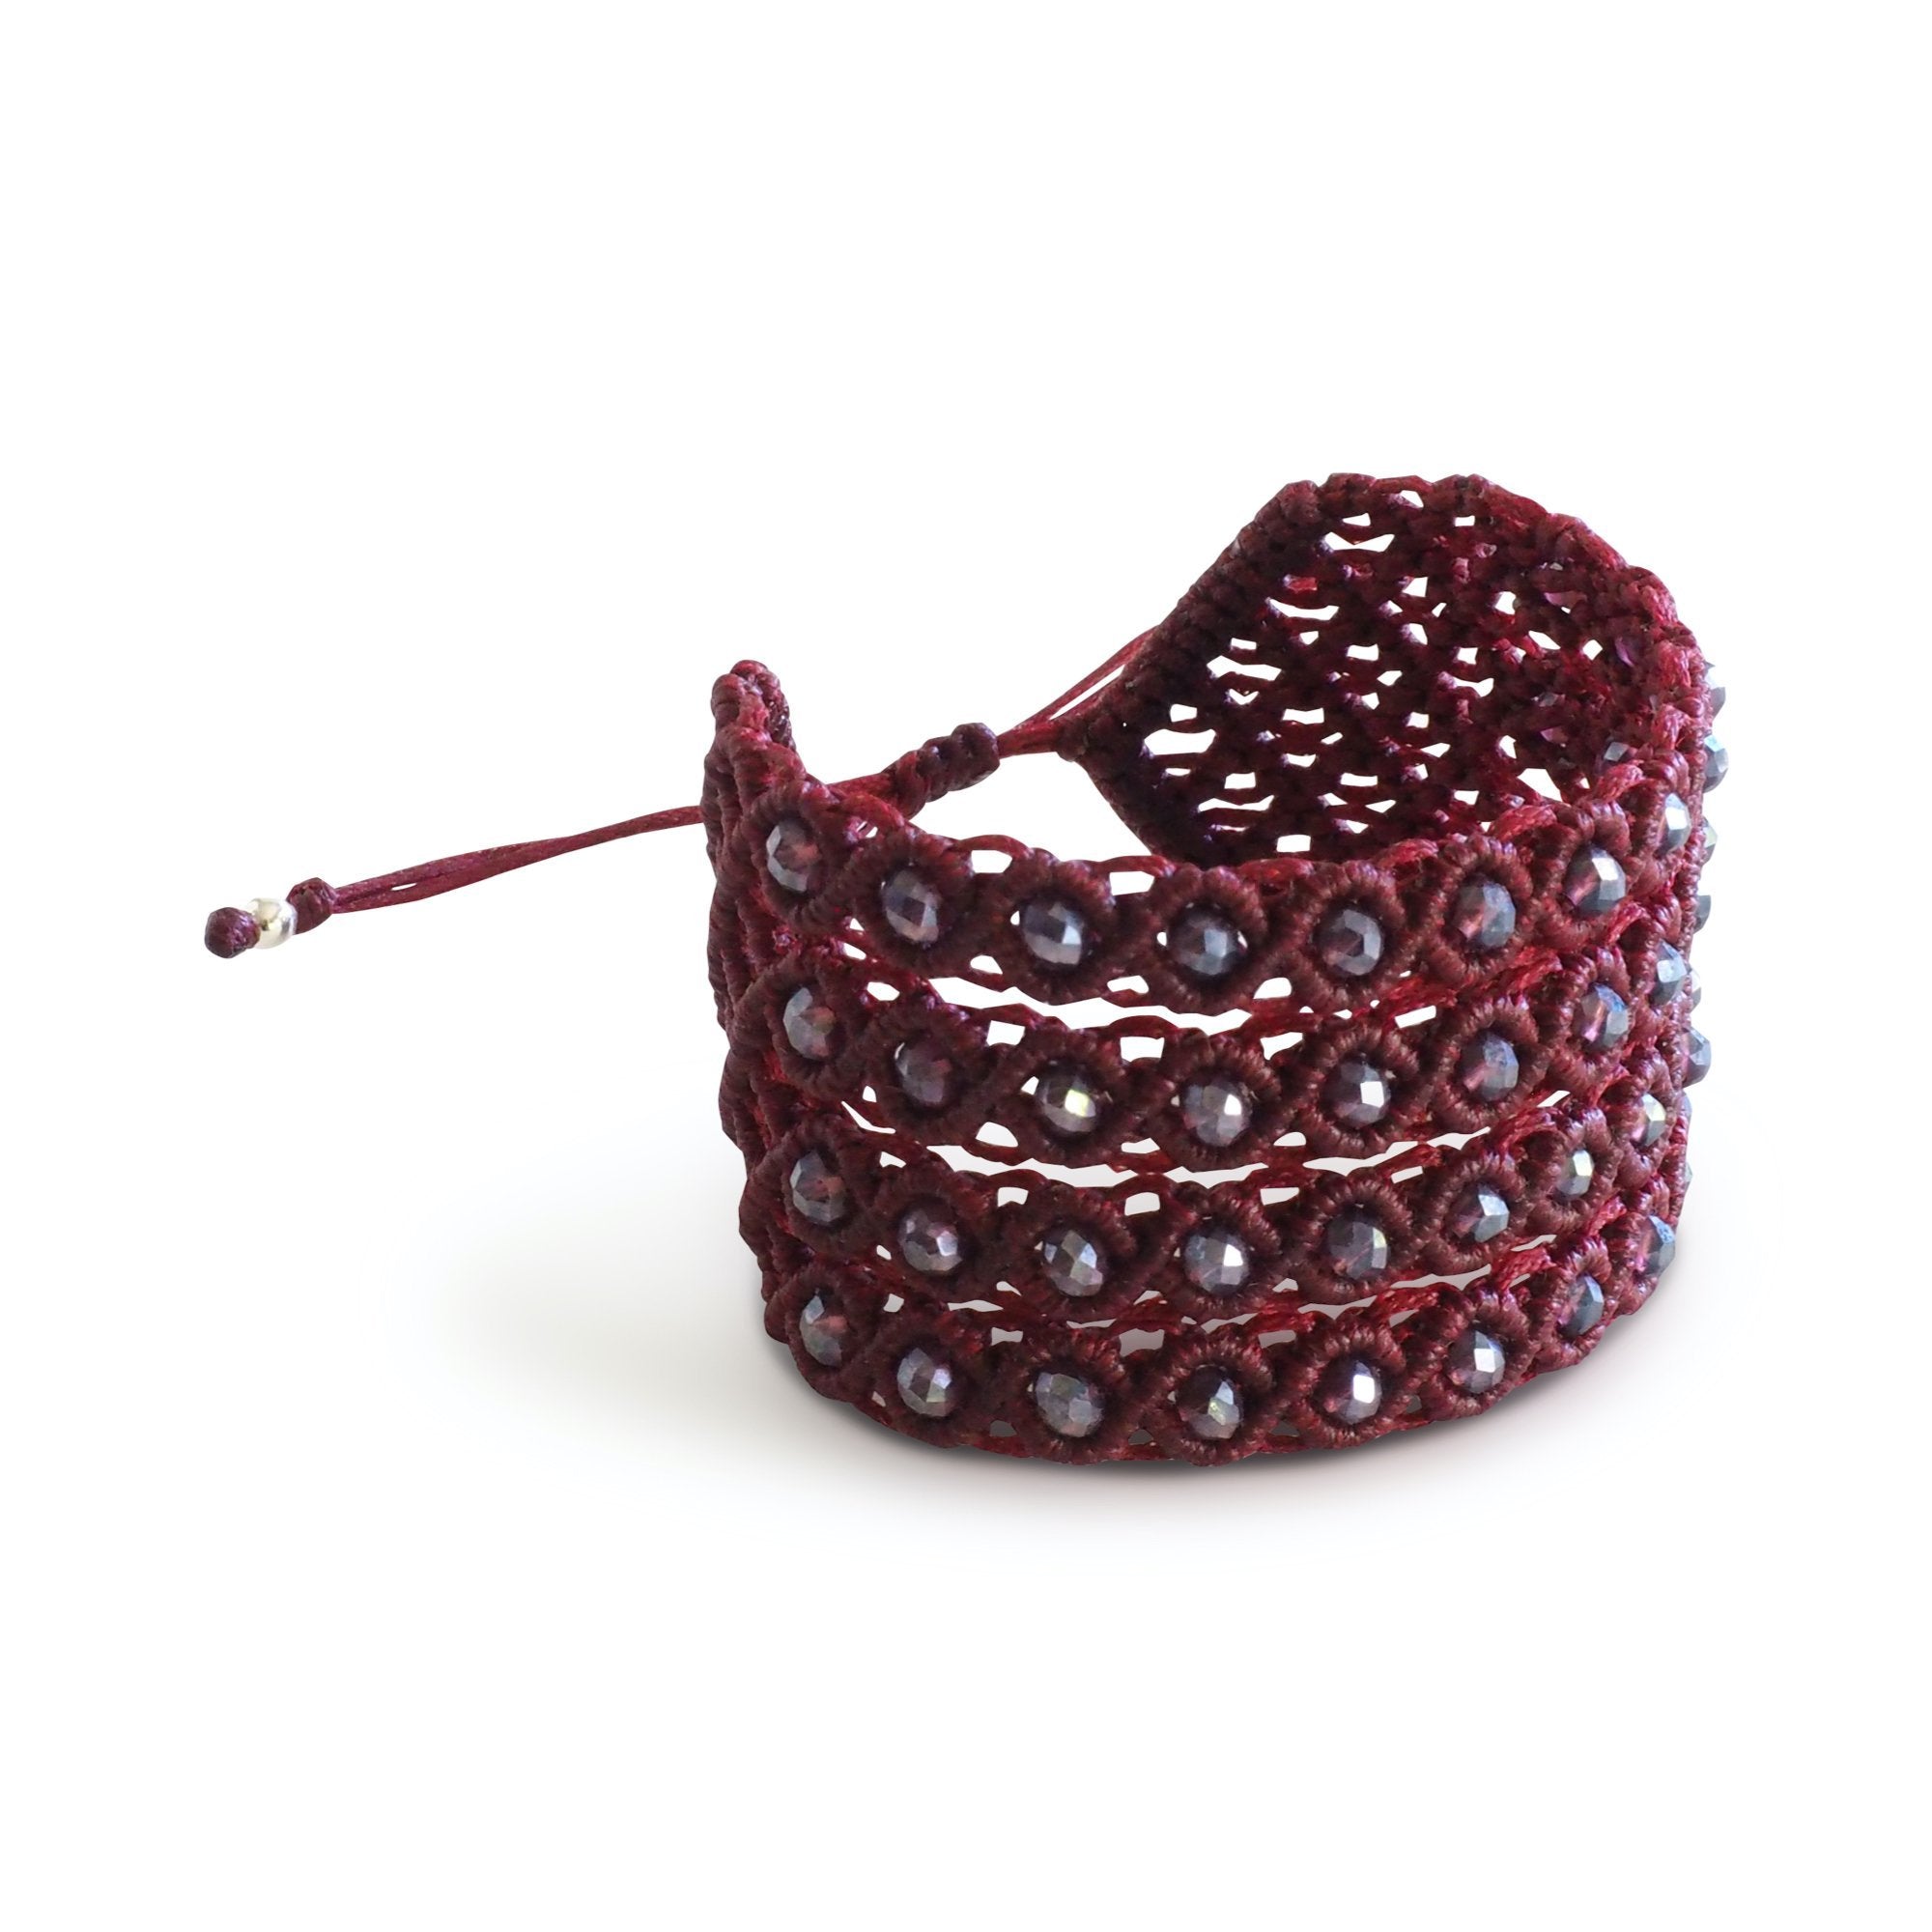 Macrame Cuff Adjustable Cuff Bracelet with Czech Murano beads - Burgundy